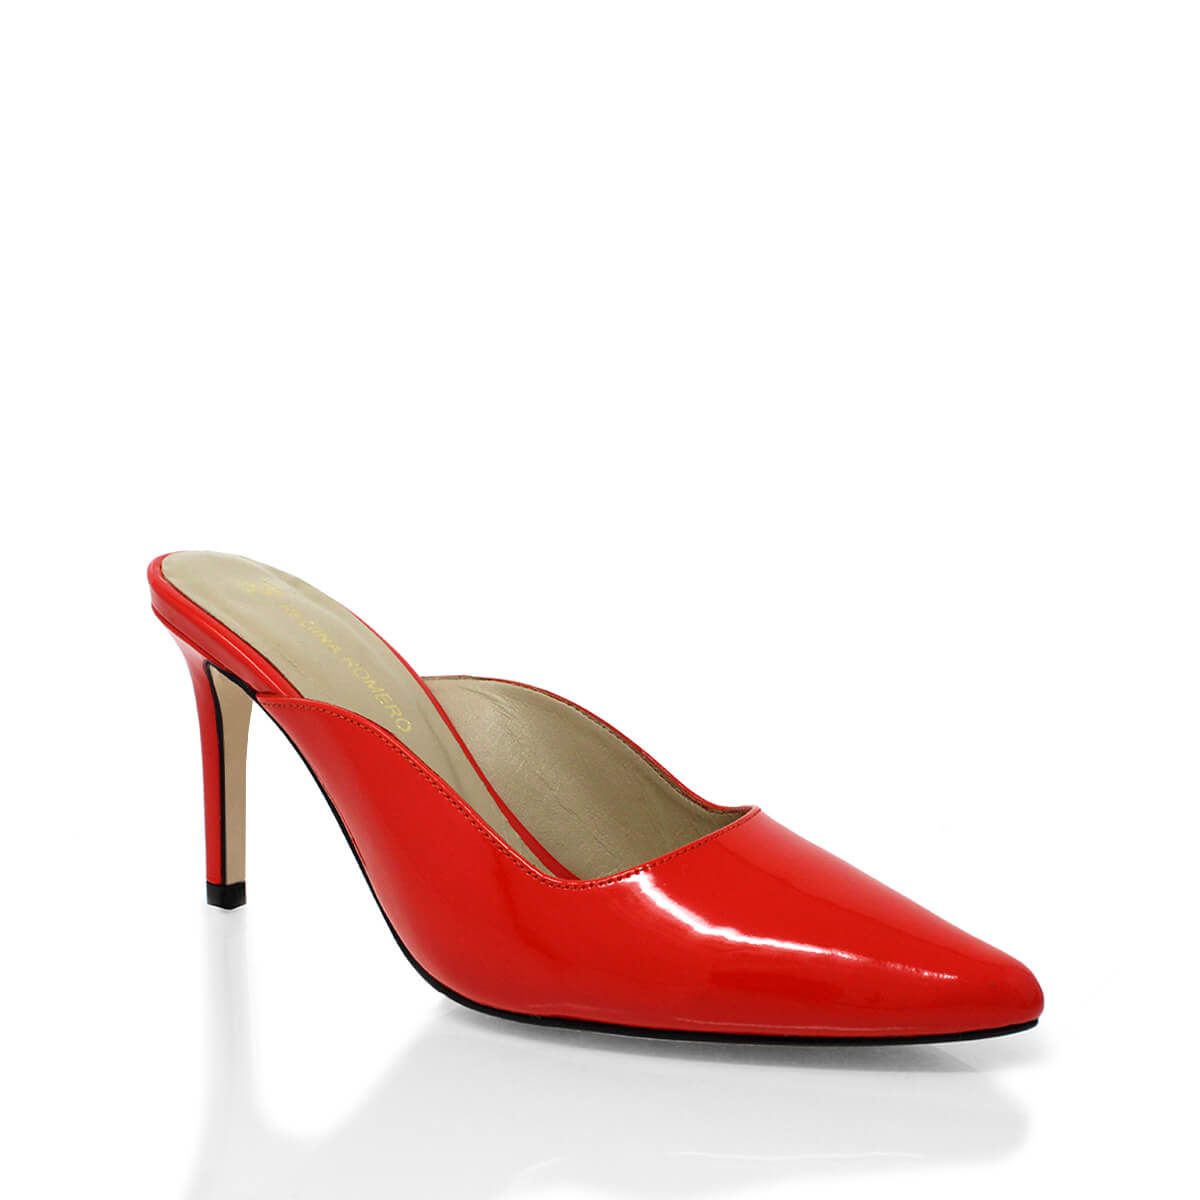 COSMO 80 - Geranium Red Patent Leather Regina Romero High Heel Sneaker Shoe for Women in Leather